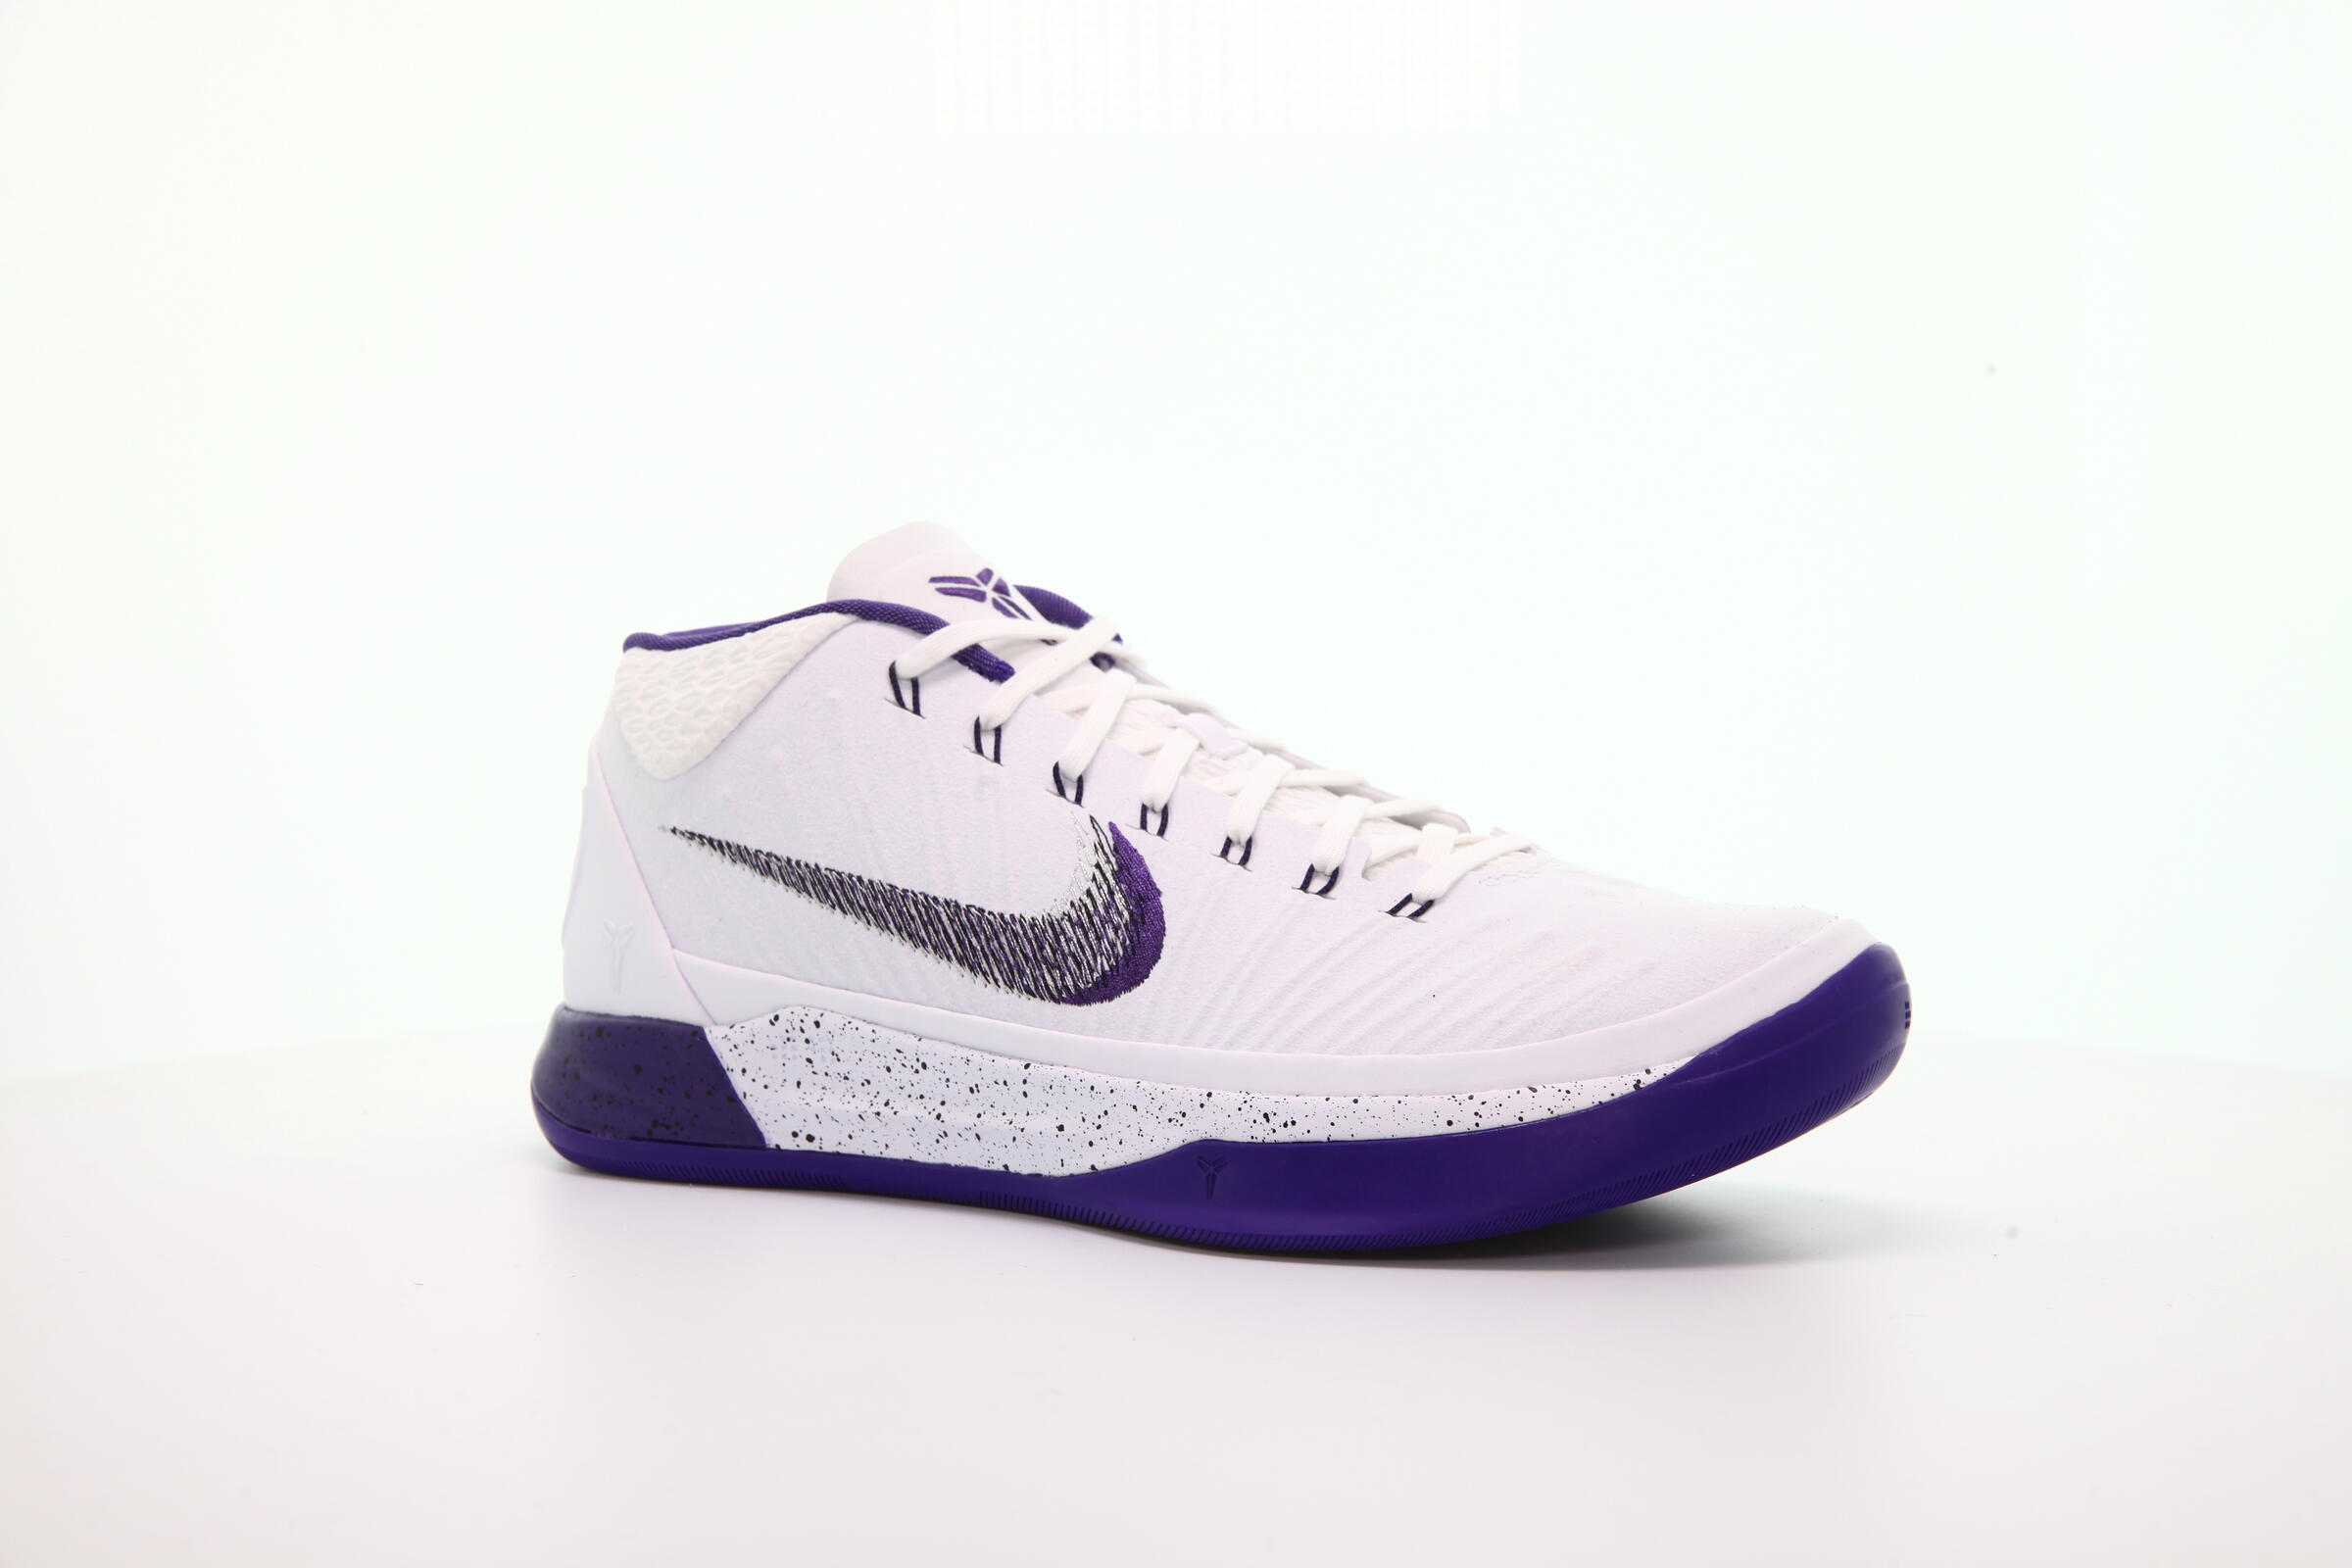 Nike Kobe A.d. 1 "White"